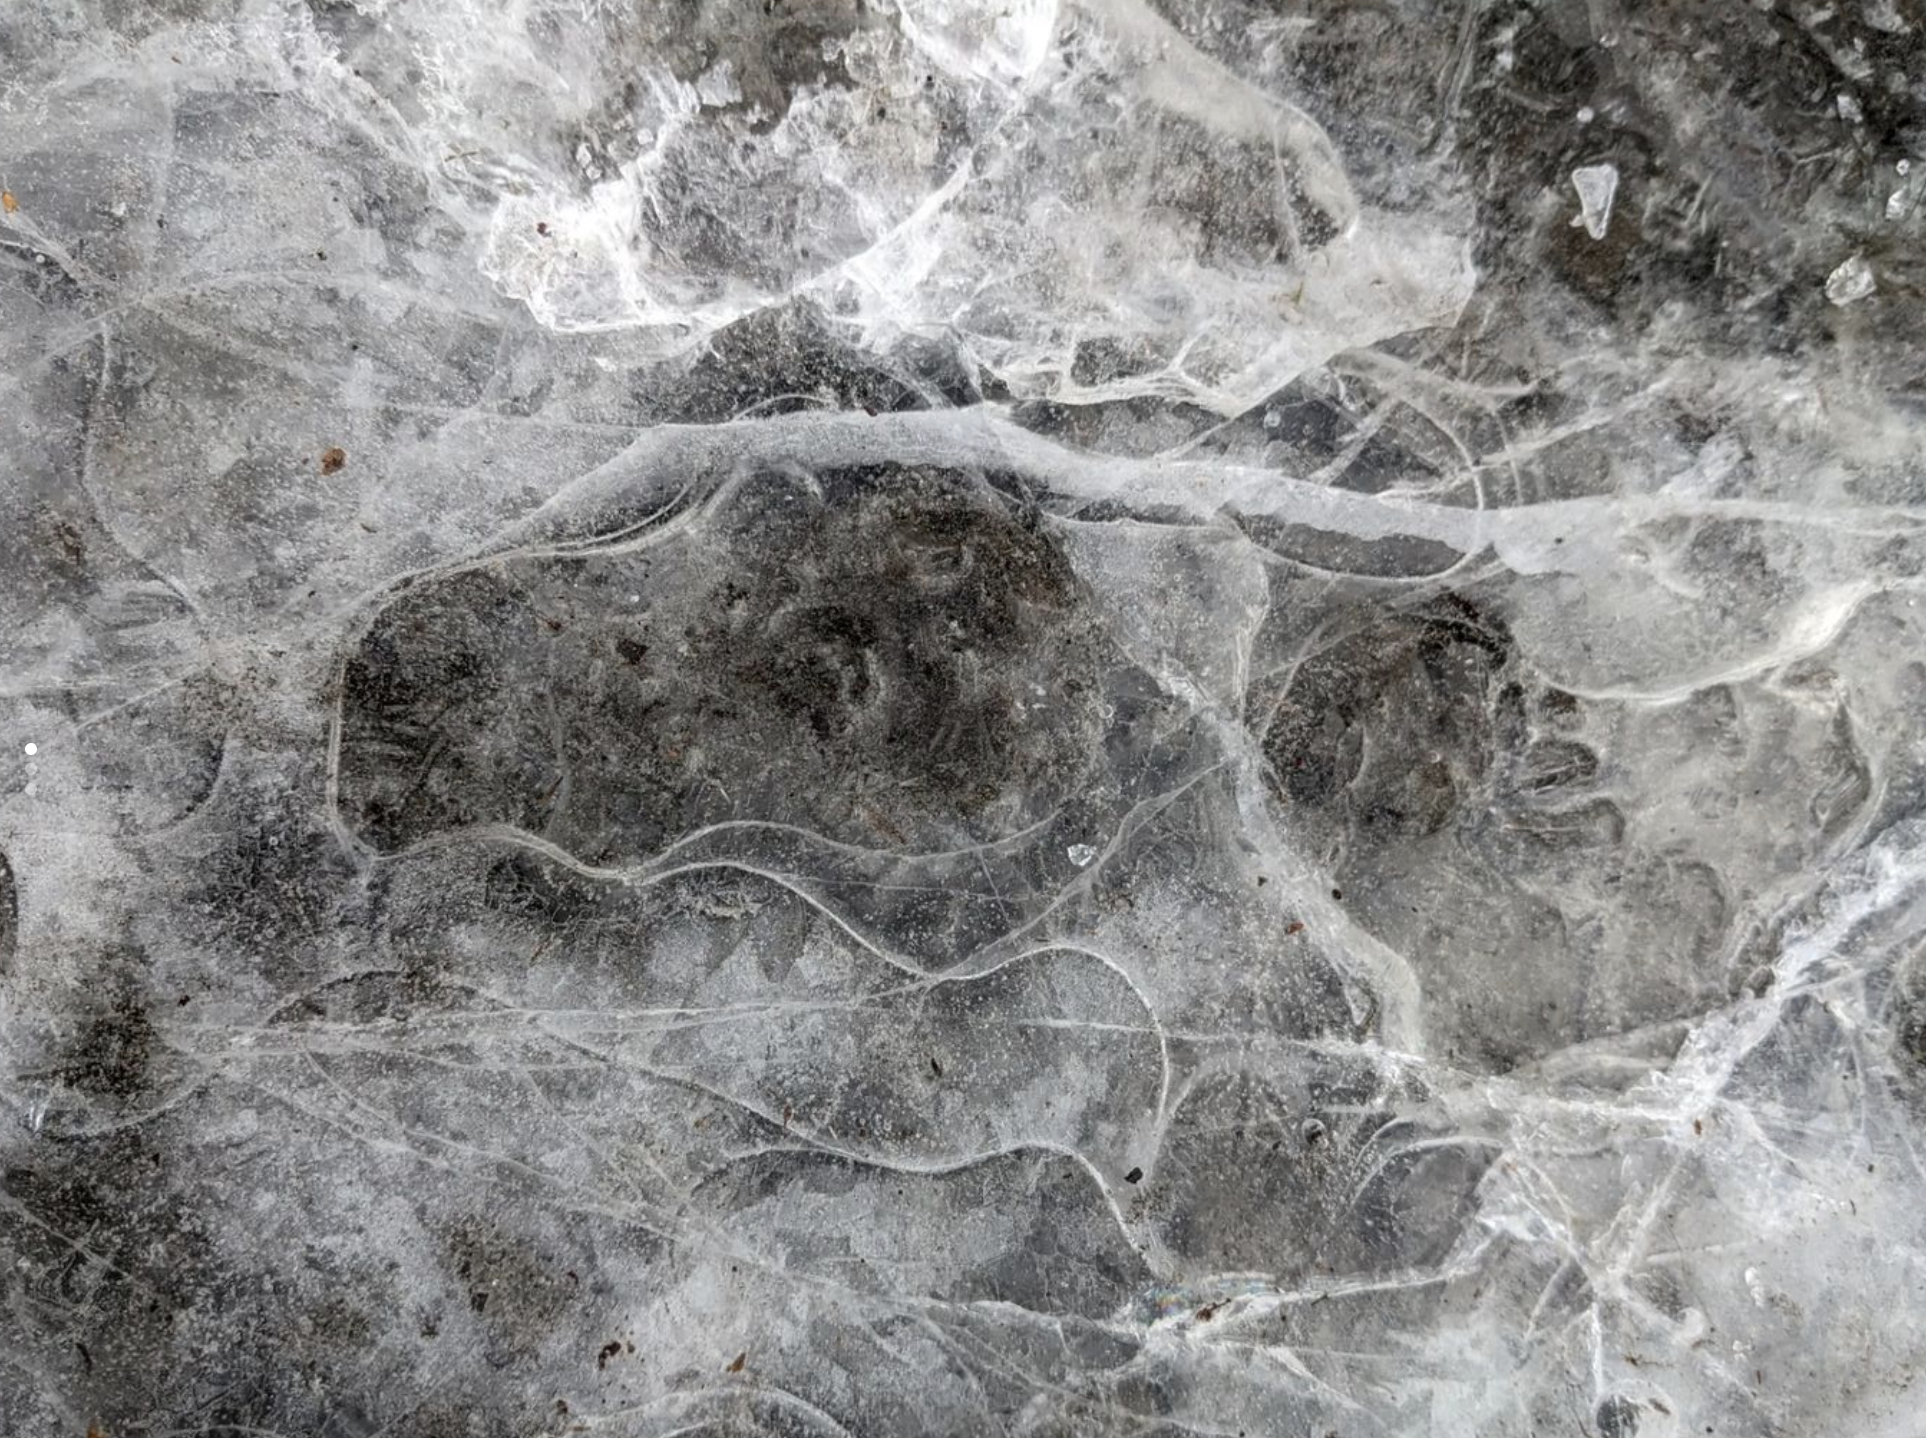 Photograph taken by artist Alex Gardner of inspiring textures of ice.